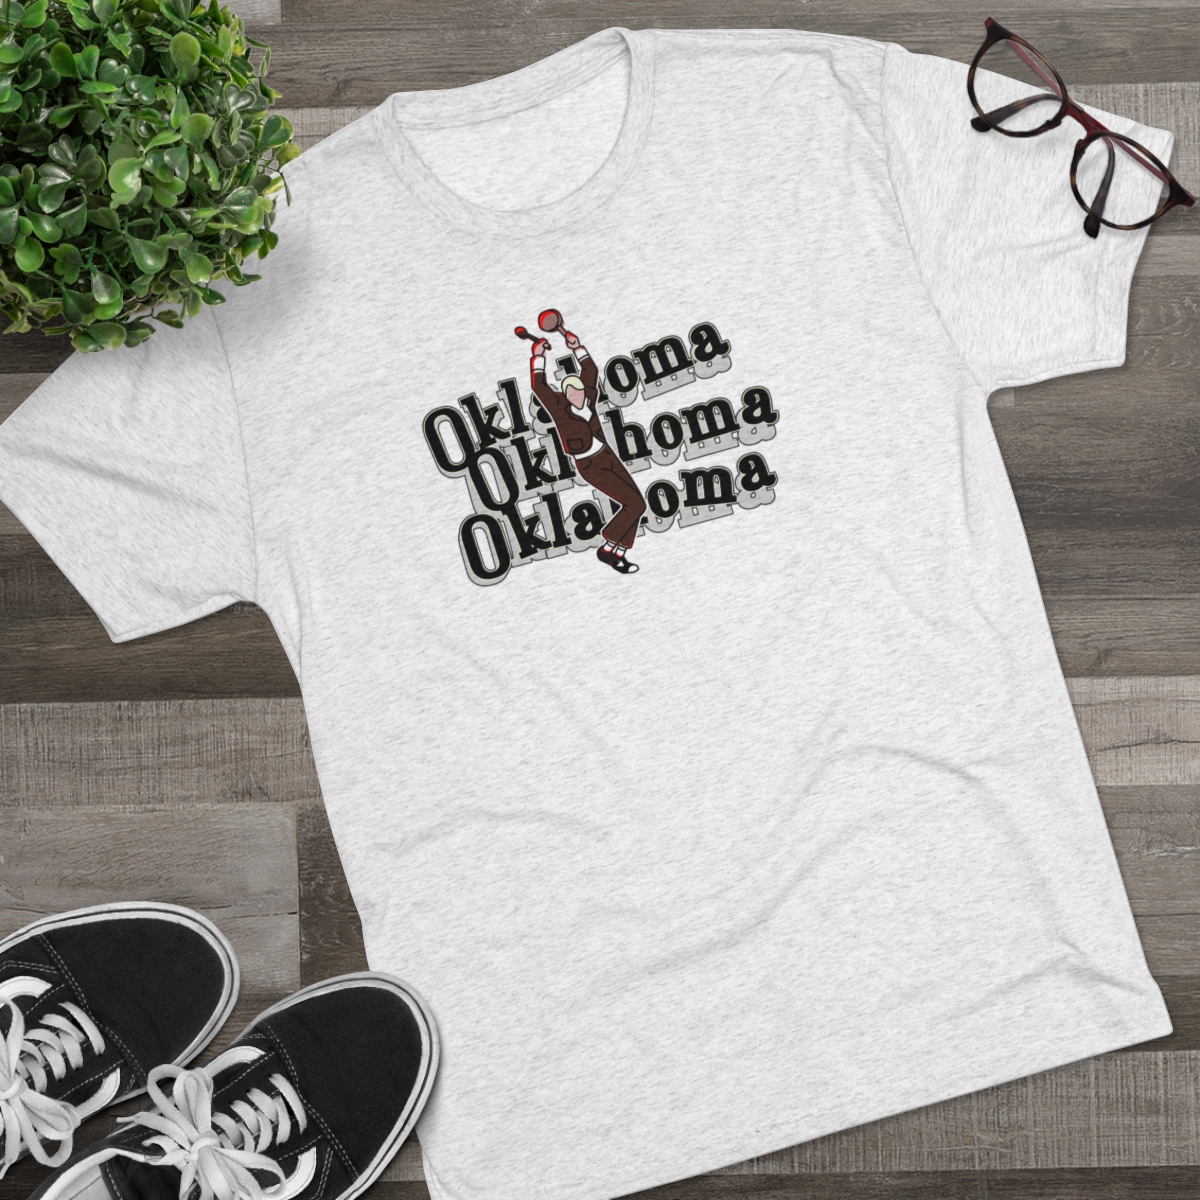 Oklahoma! (light shirts) - Unisex Tri-Blend Crew Tee